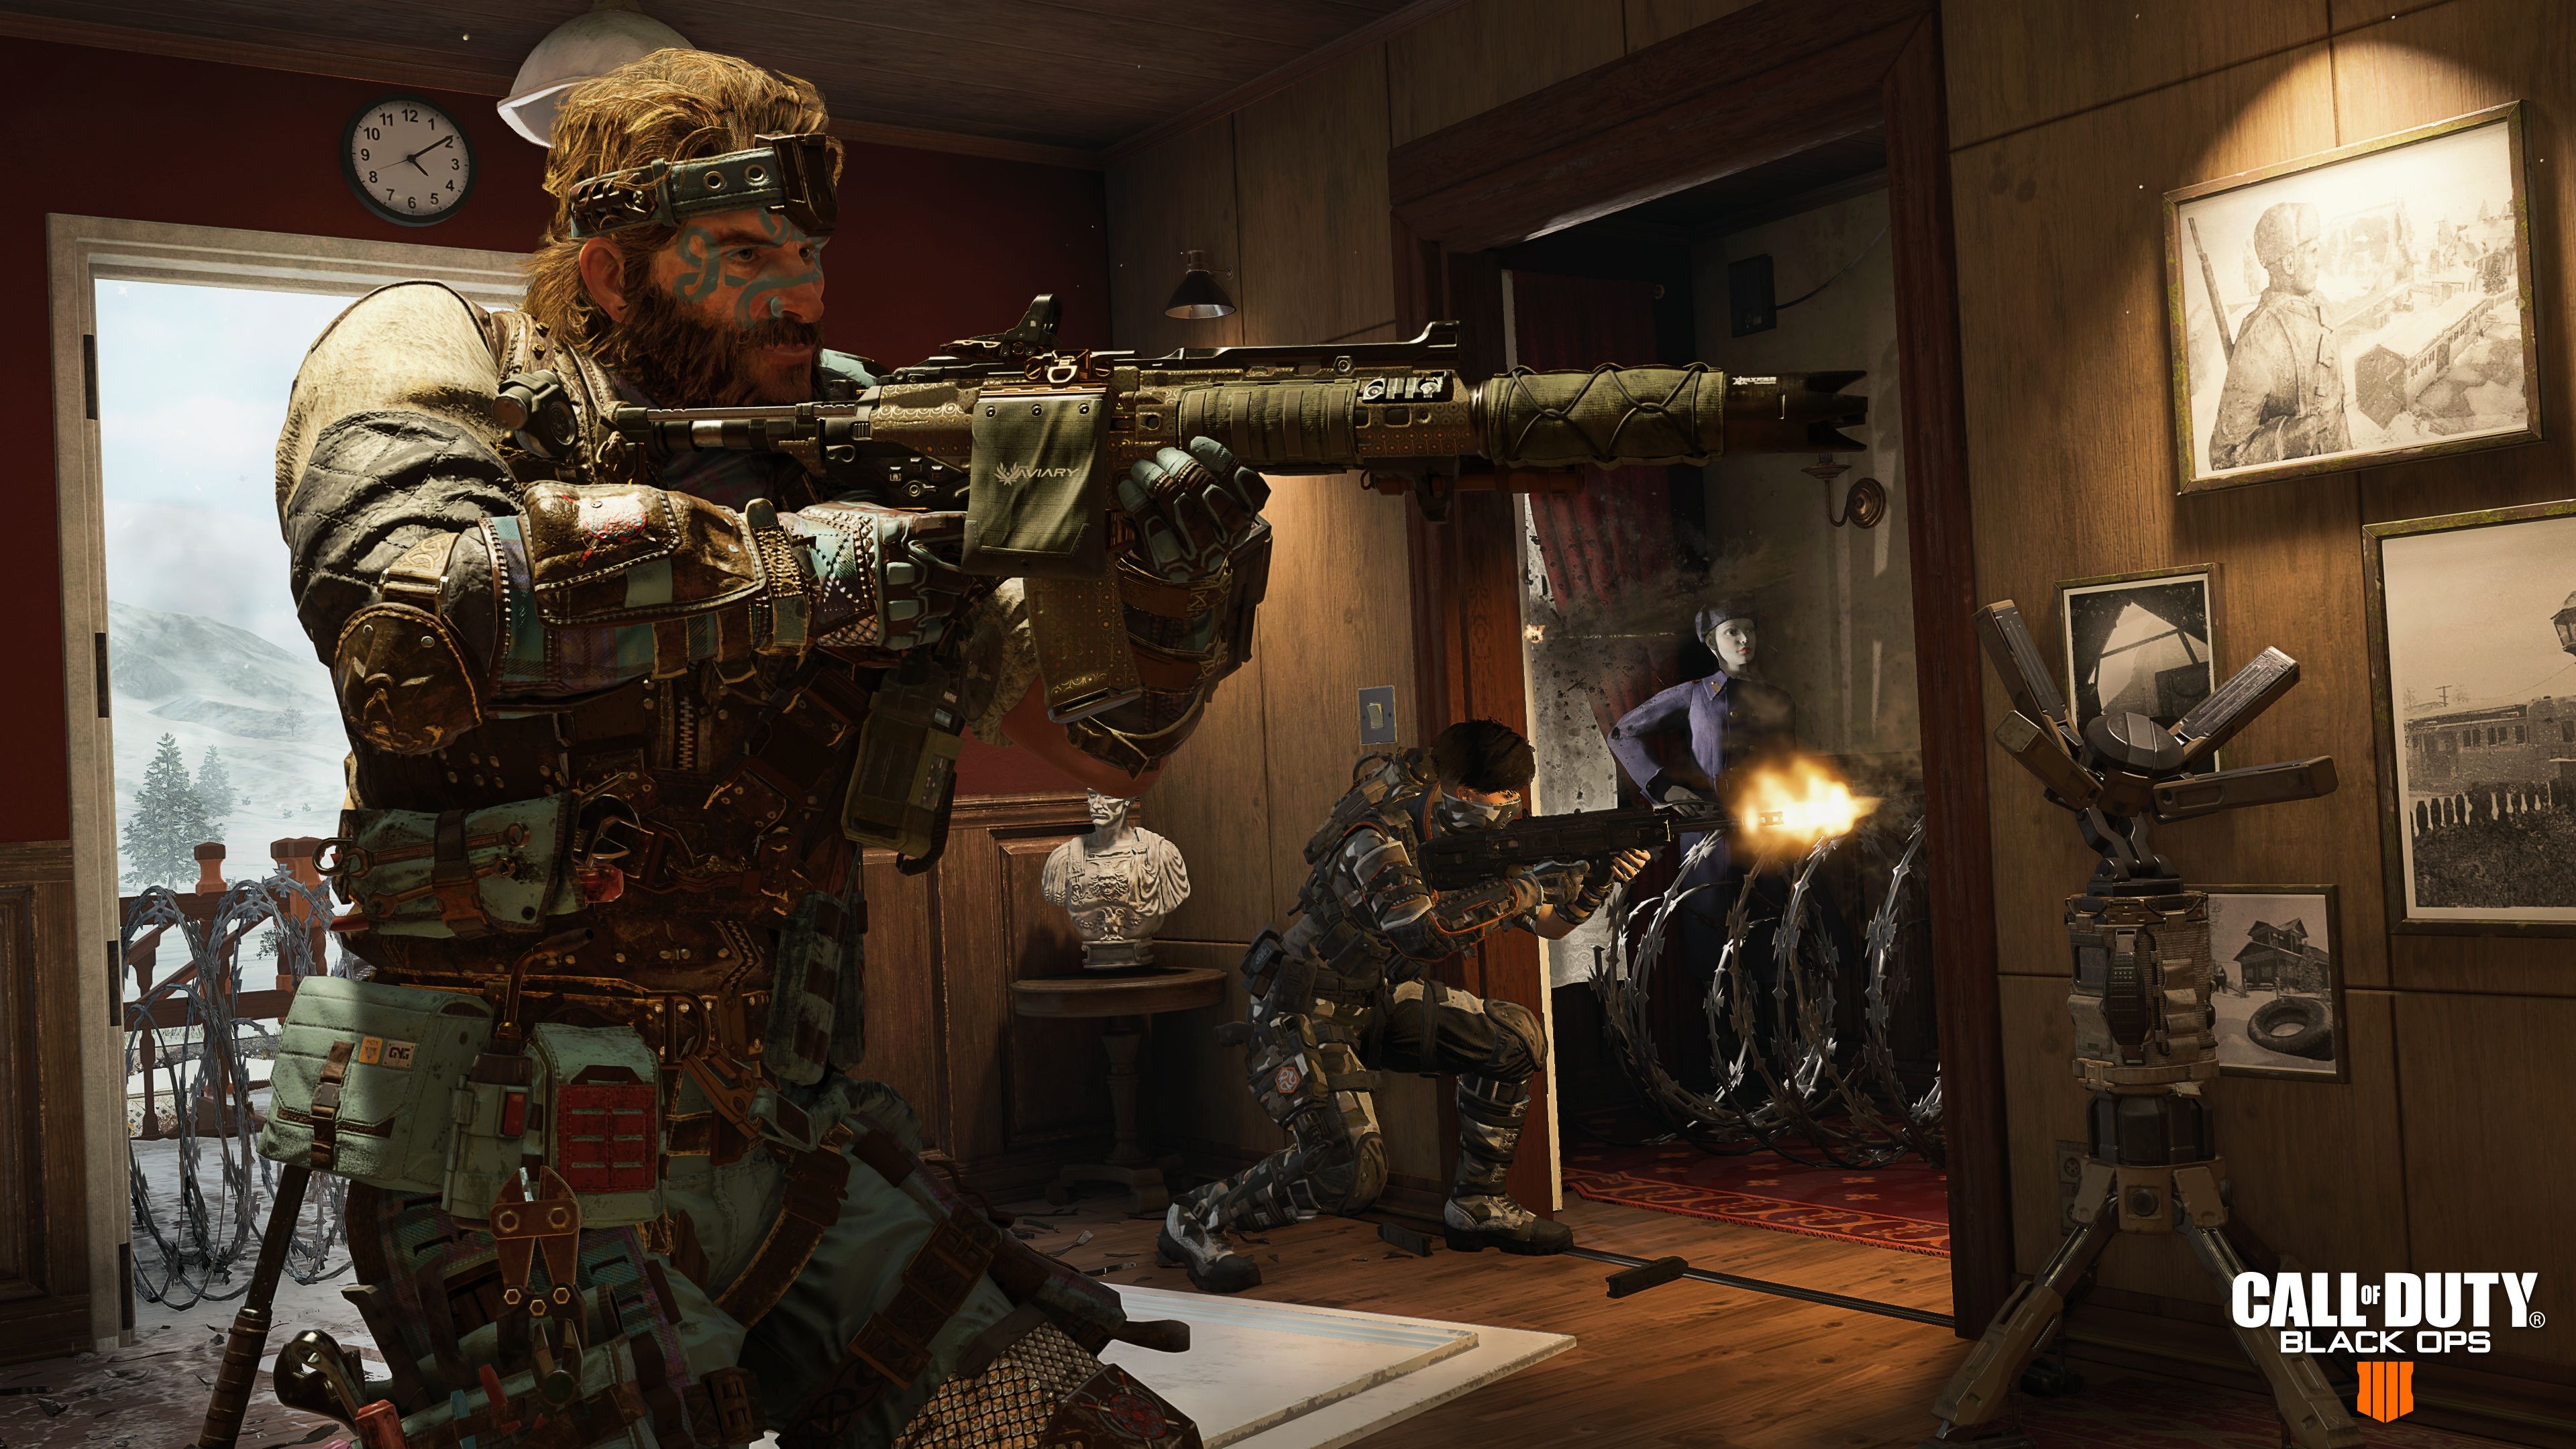 Nuketown Call Of Duty Black Ops HD Games, 4k Wallpaper, Image